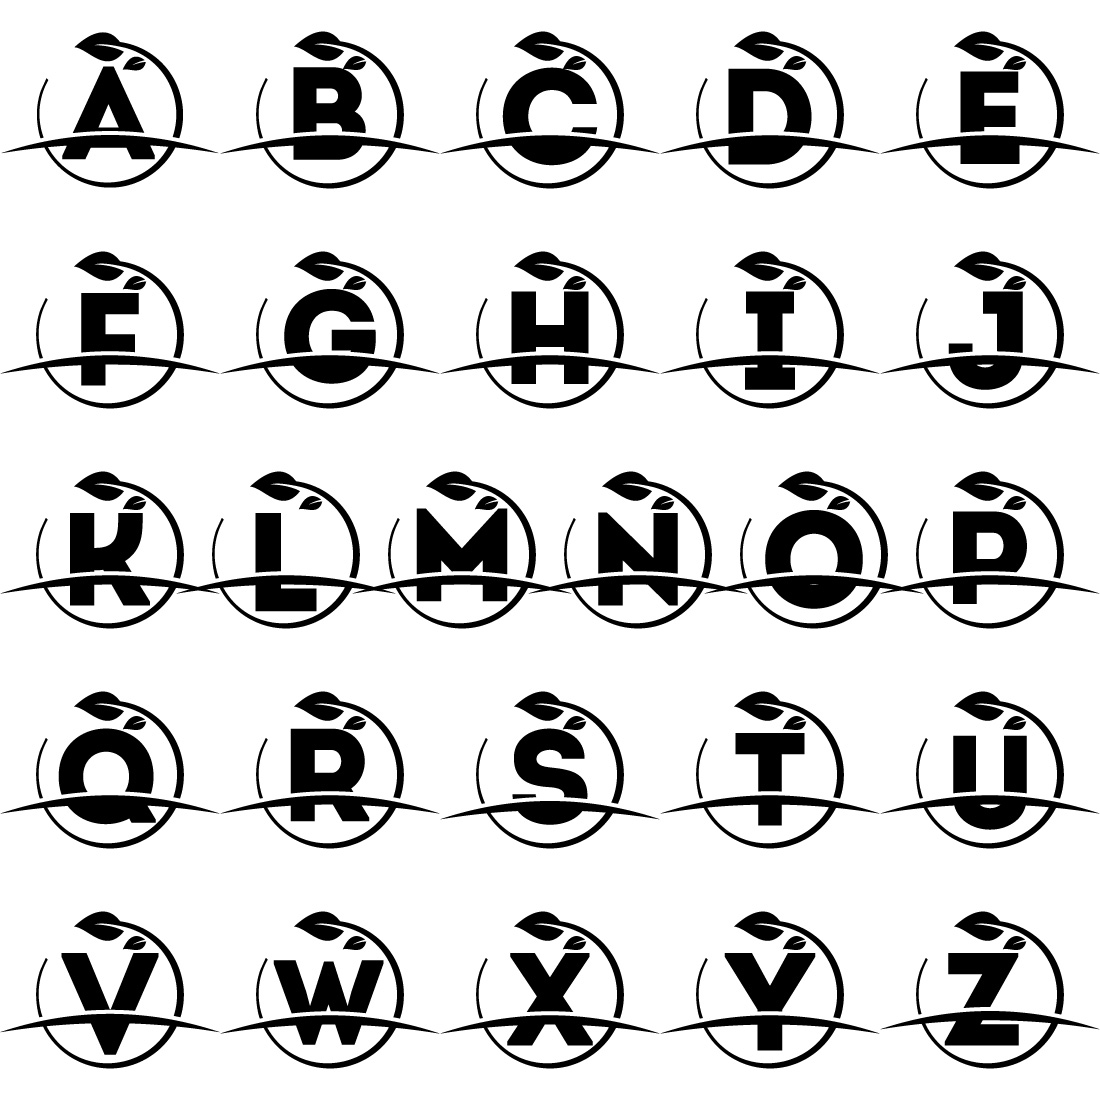 Initial A-Z monogram alphabet with circle leaf and swoosh Eco-friendly logo concept Font emblem preview image.